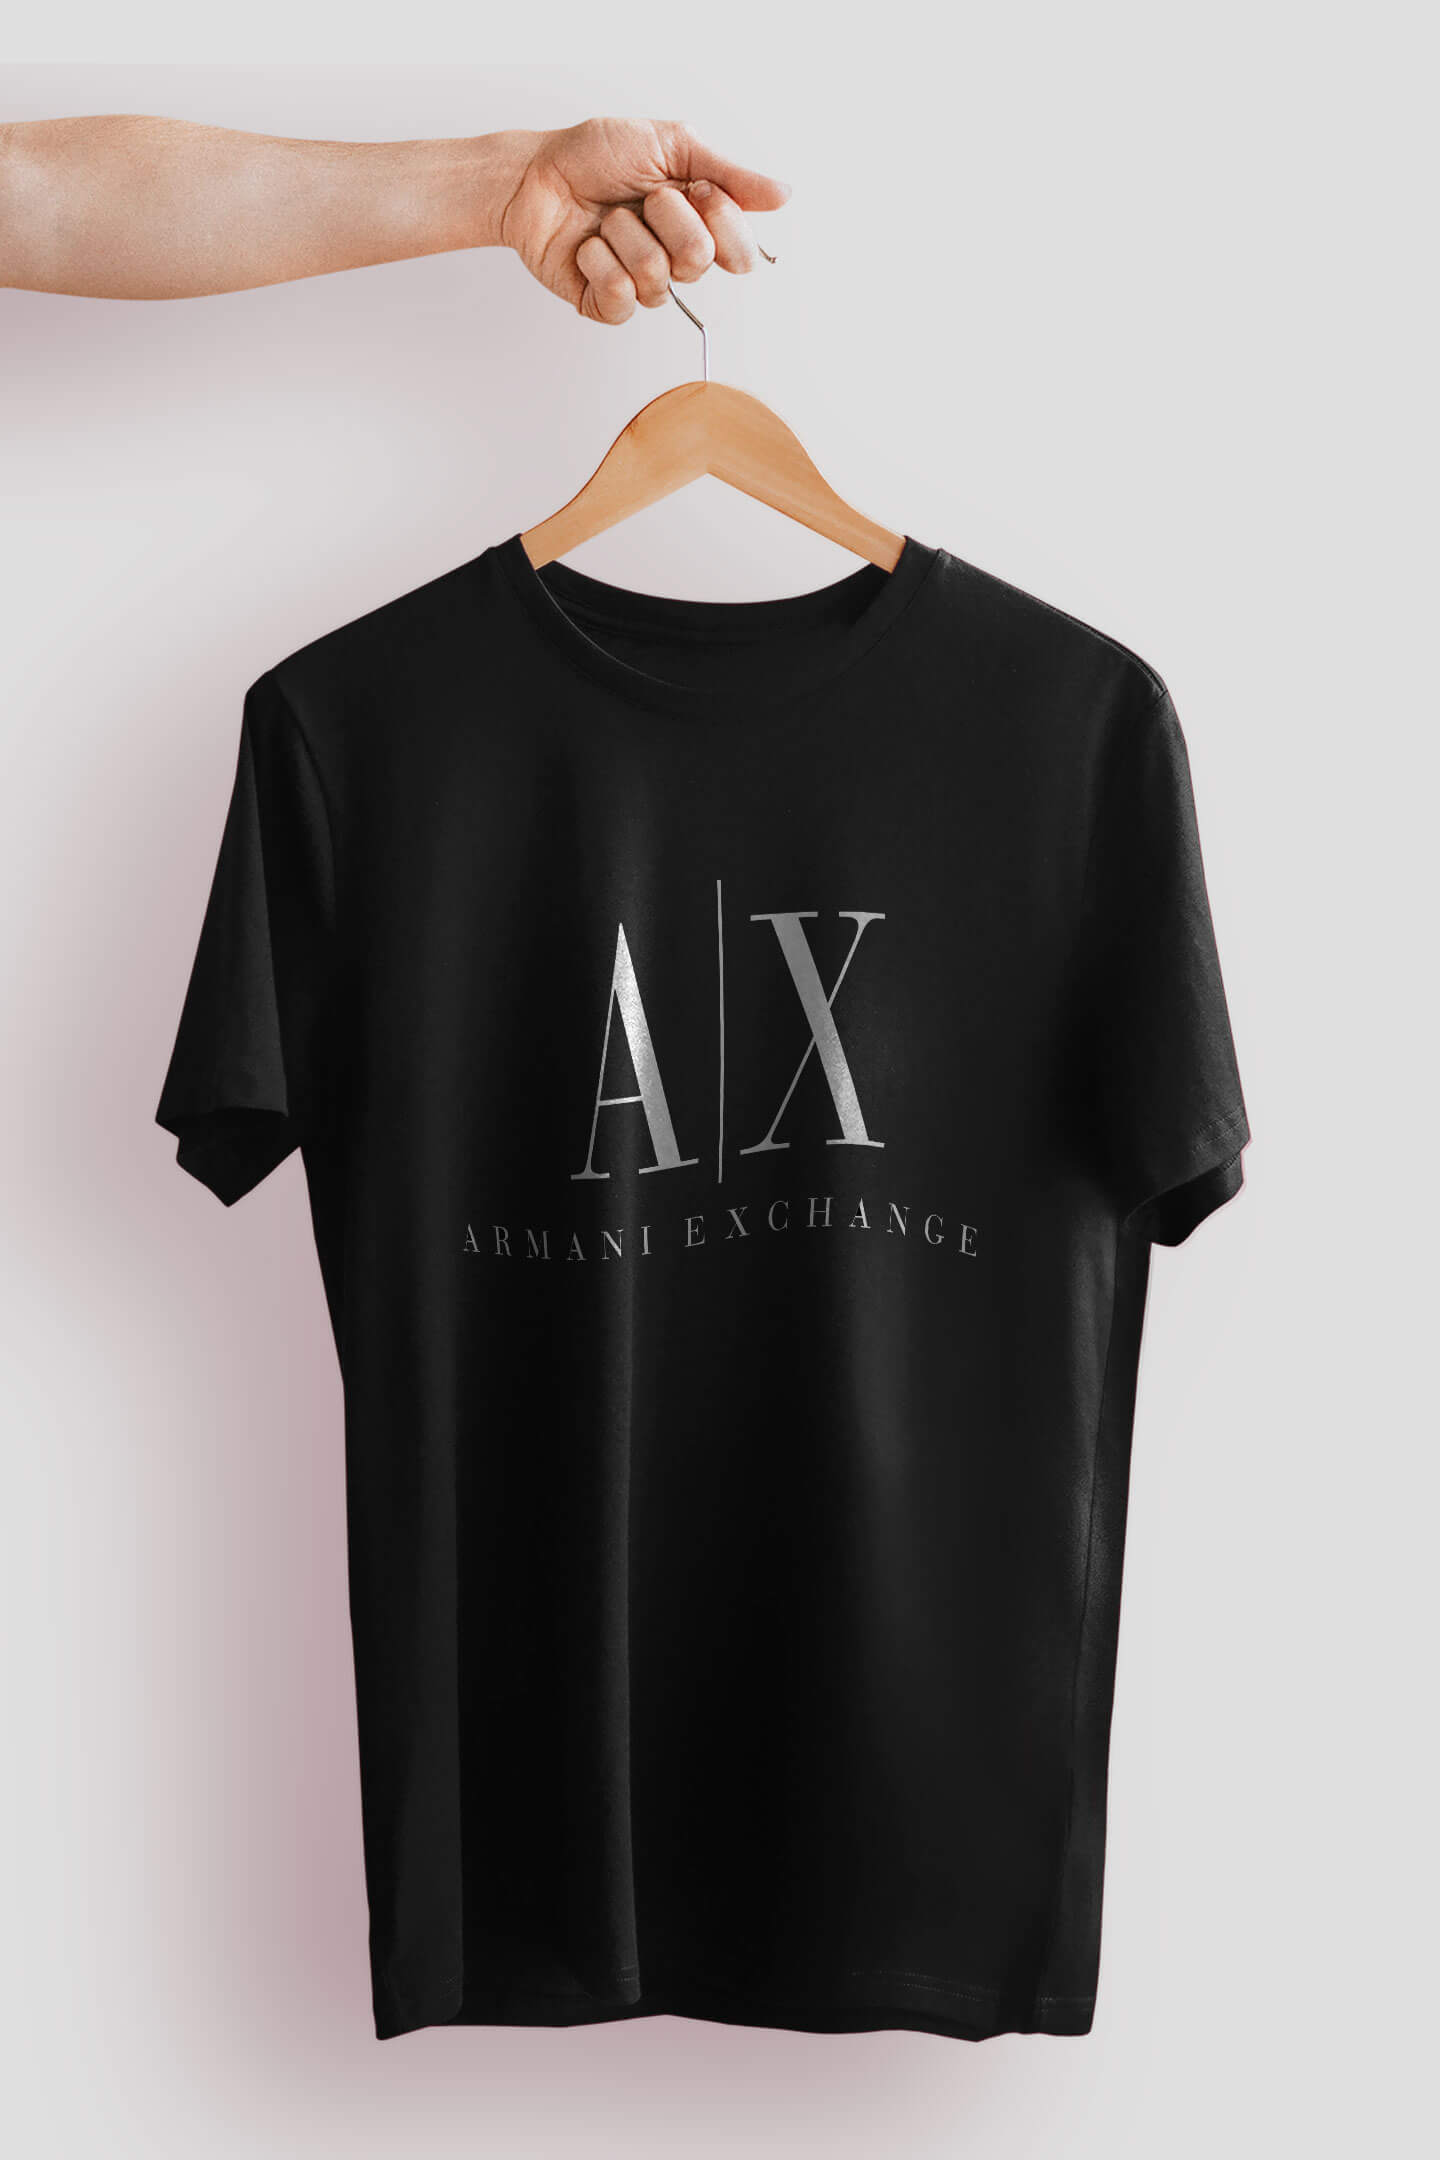 Armani Exchange for Men | Men T-shirt Online Inida | Tshirtsopedia